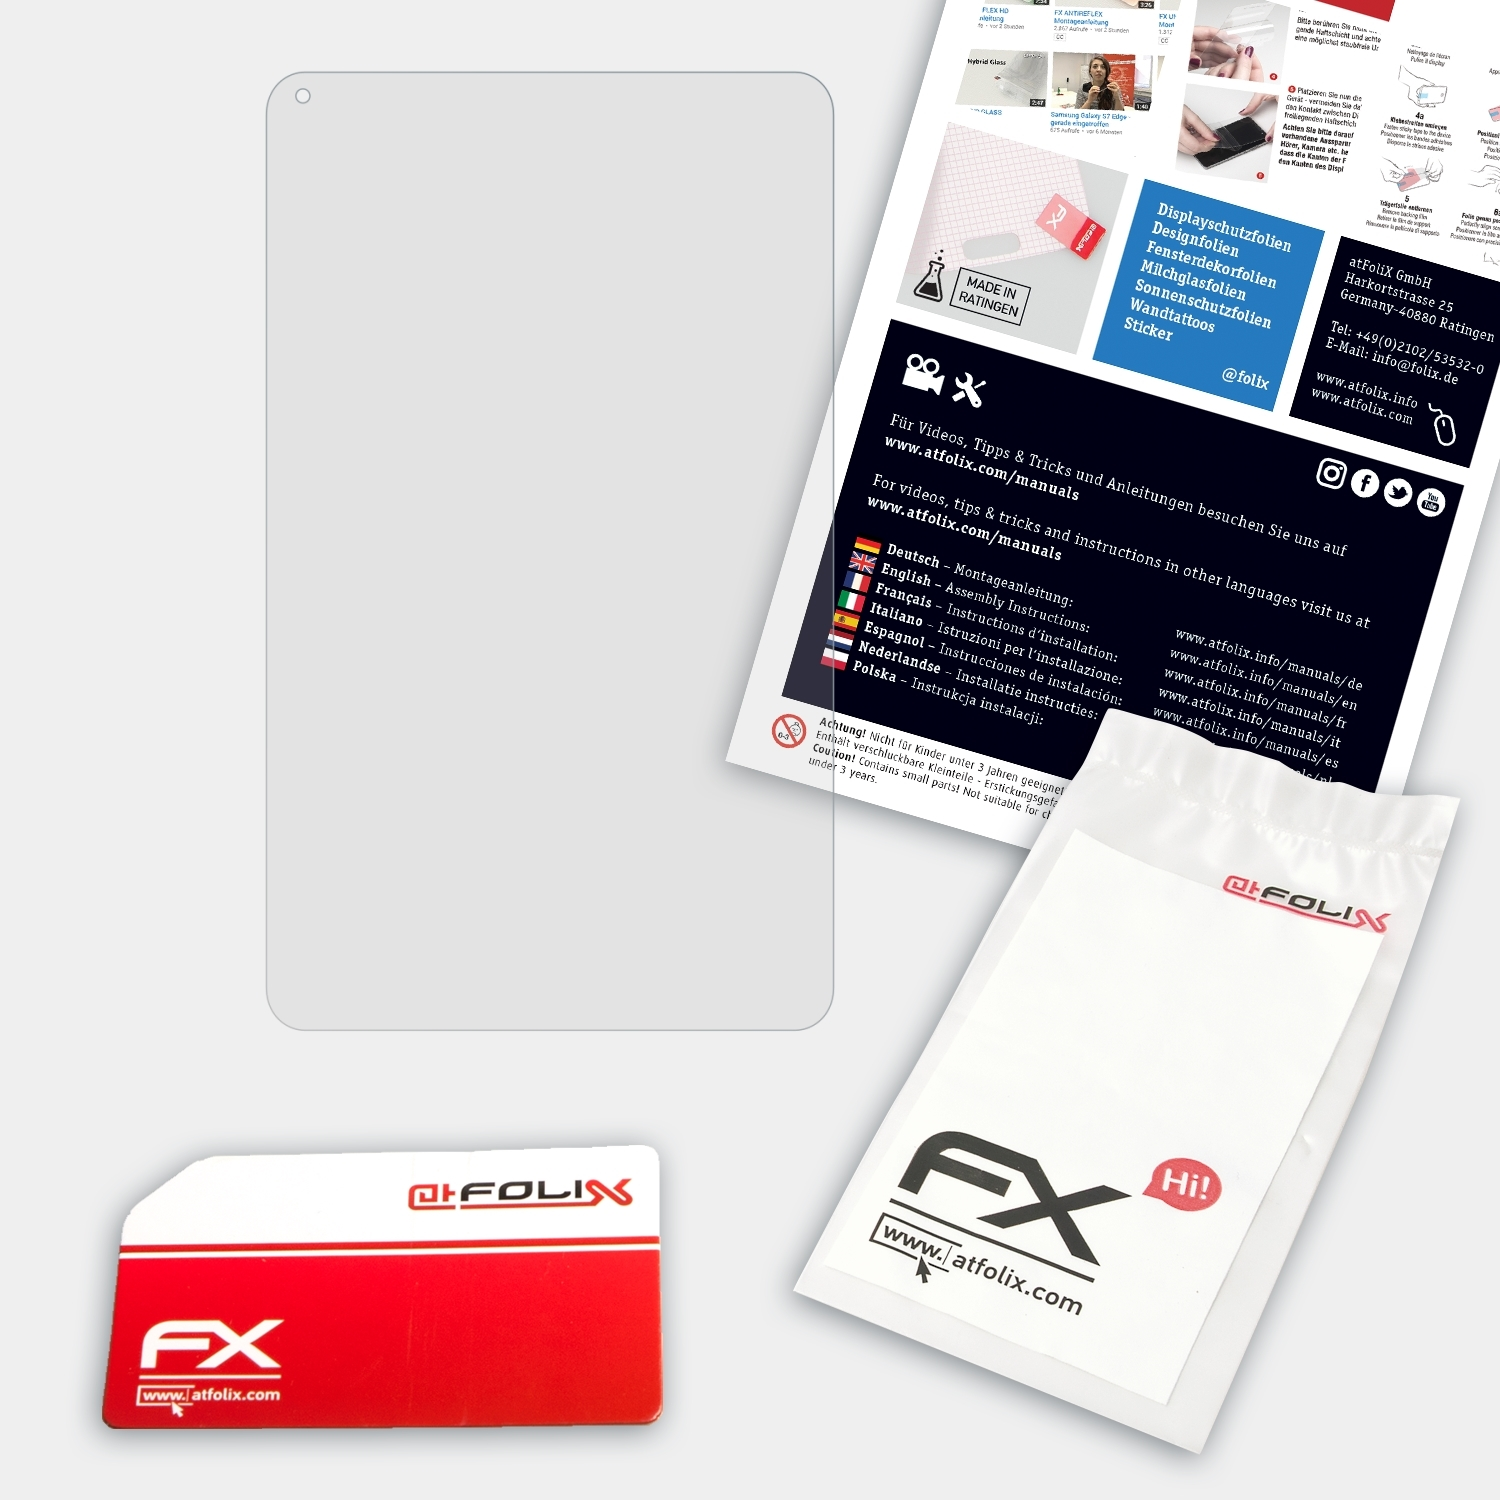 10 SmartPad ATFOLIX Mediacom FX-Hybrid-Glass HD) Hx Schutzglas(für